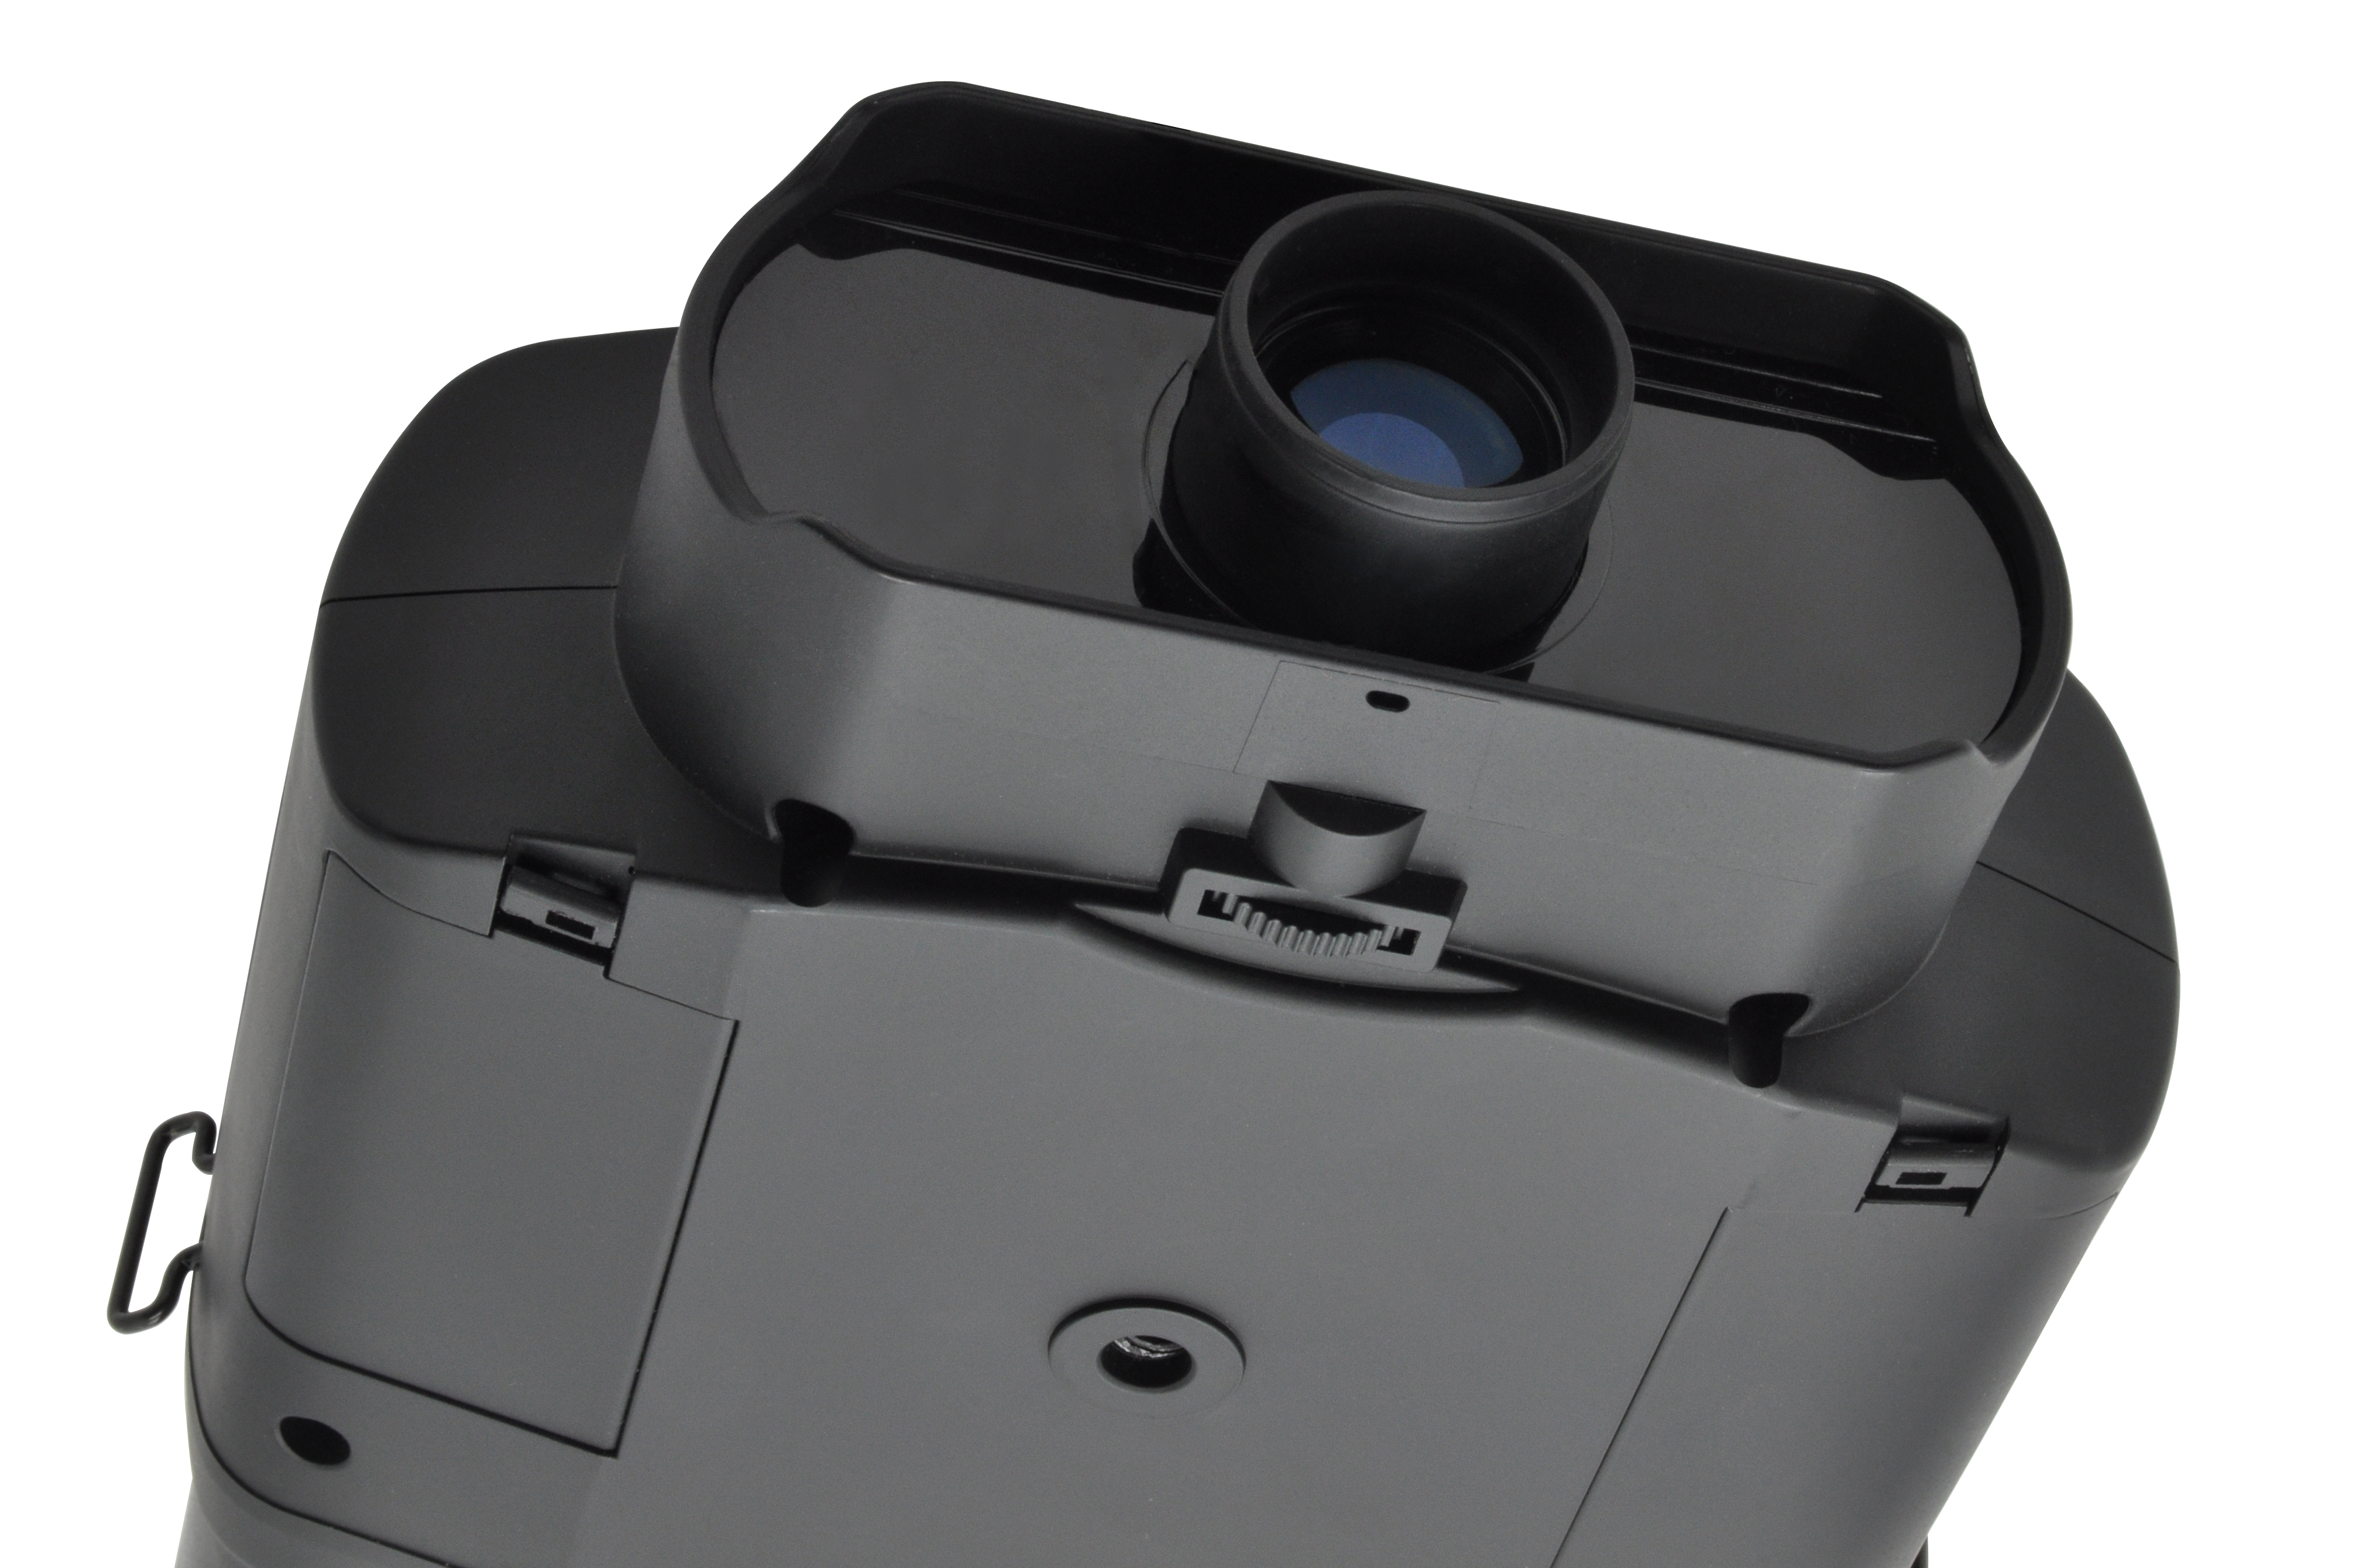 BRESSER Digitales Nachtsichtgerät Binokular 3x20 mm, 20 Nachtsicht 6, Aufnahmegerät